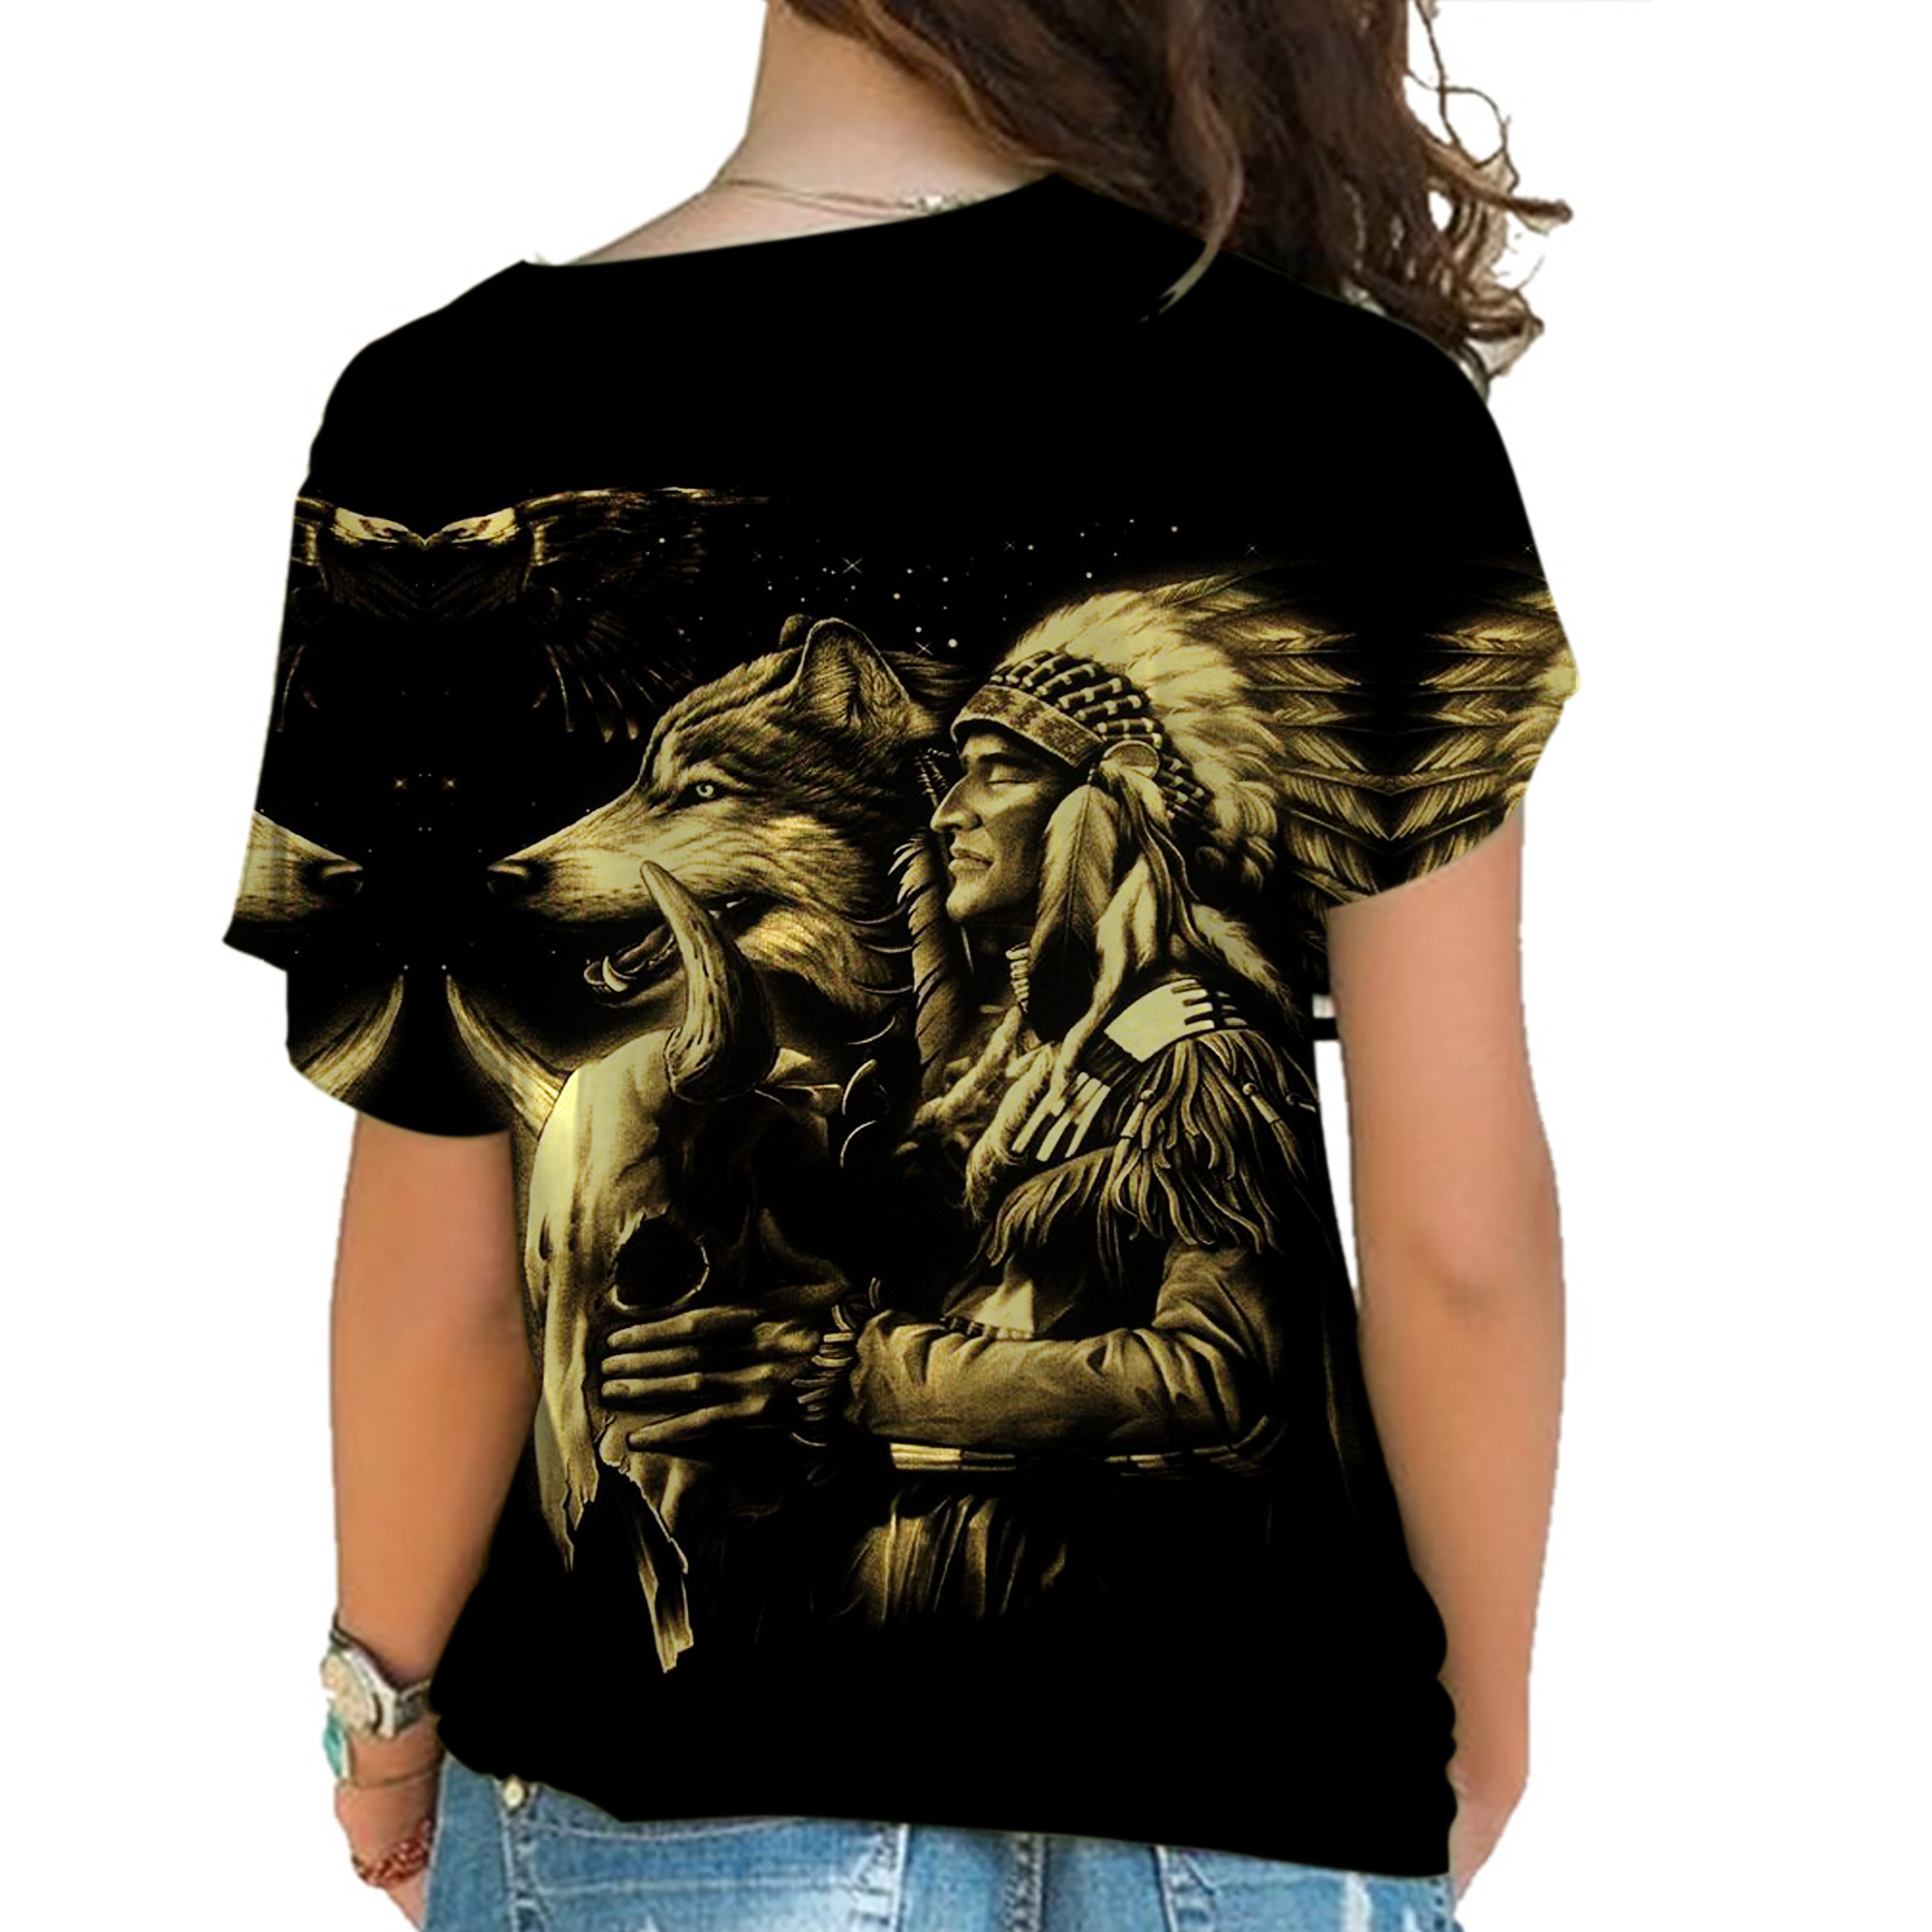 Native American Cross Shoulder Shirt 172 - Powwow Store